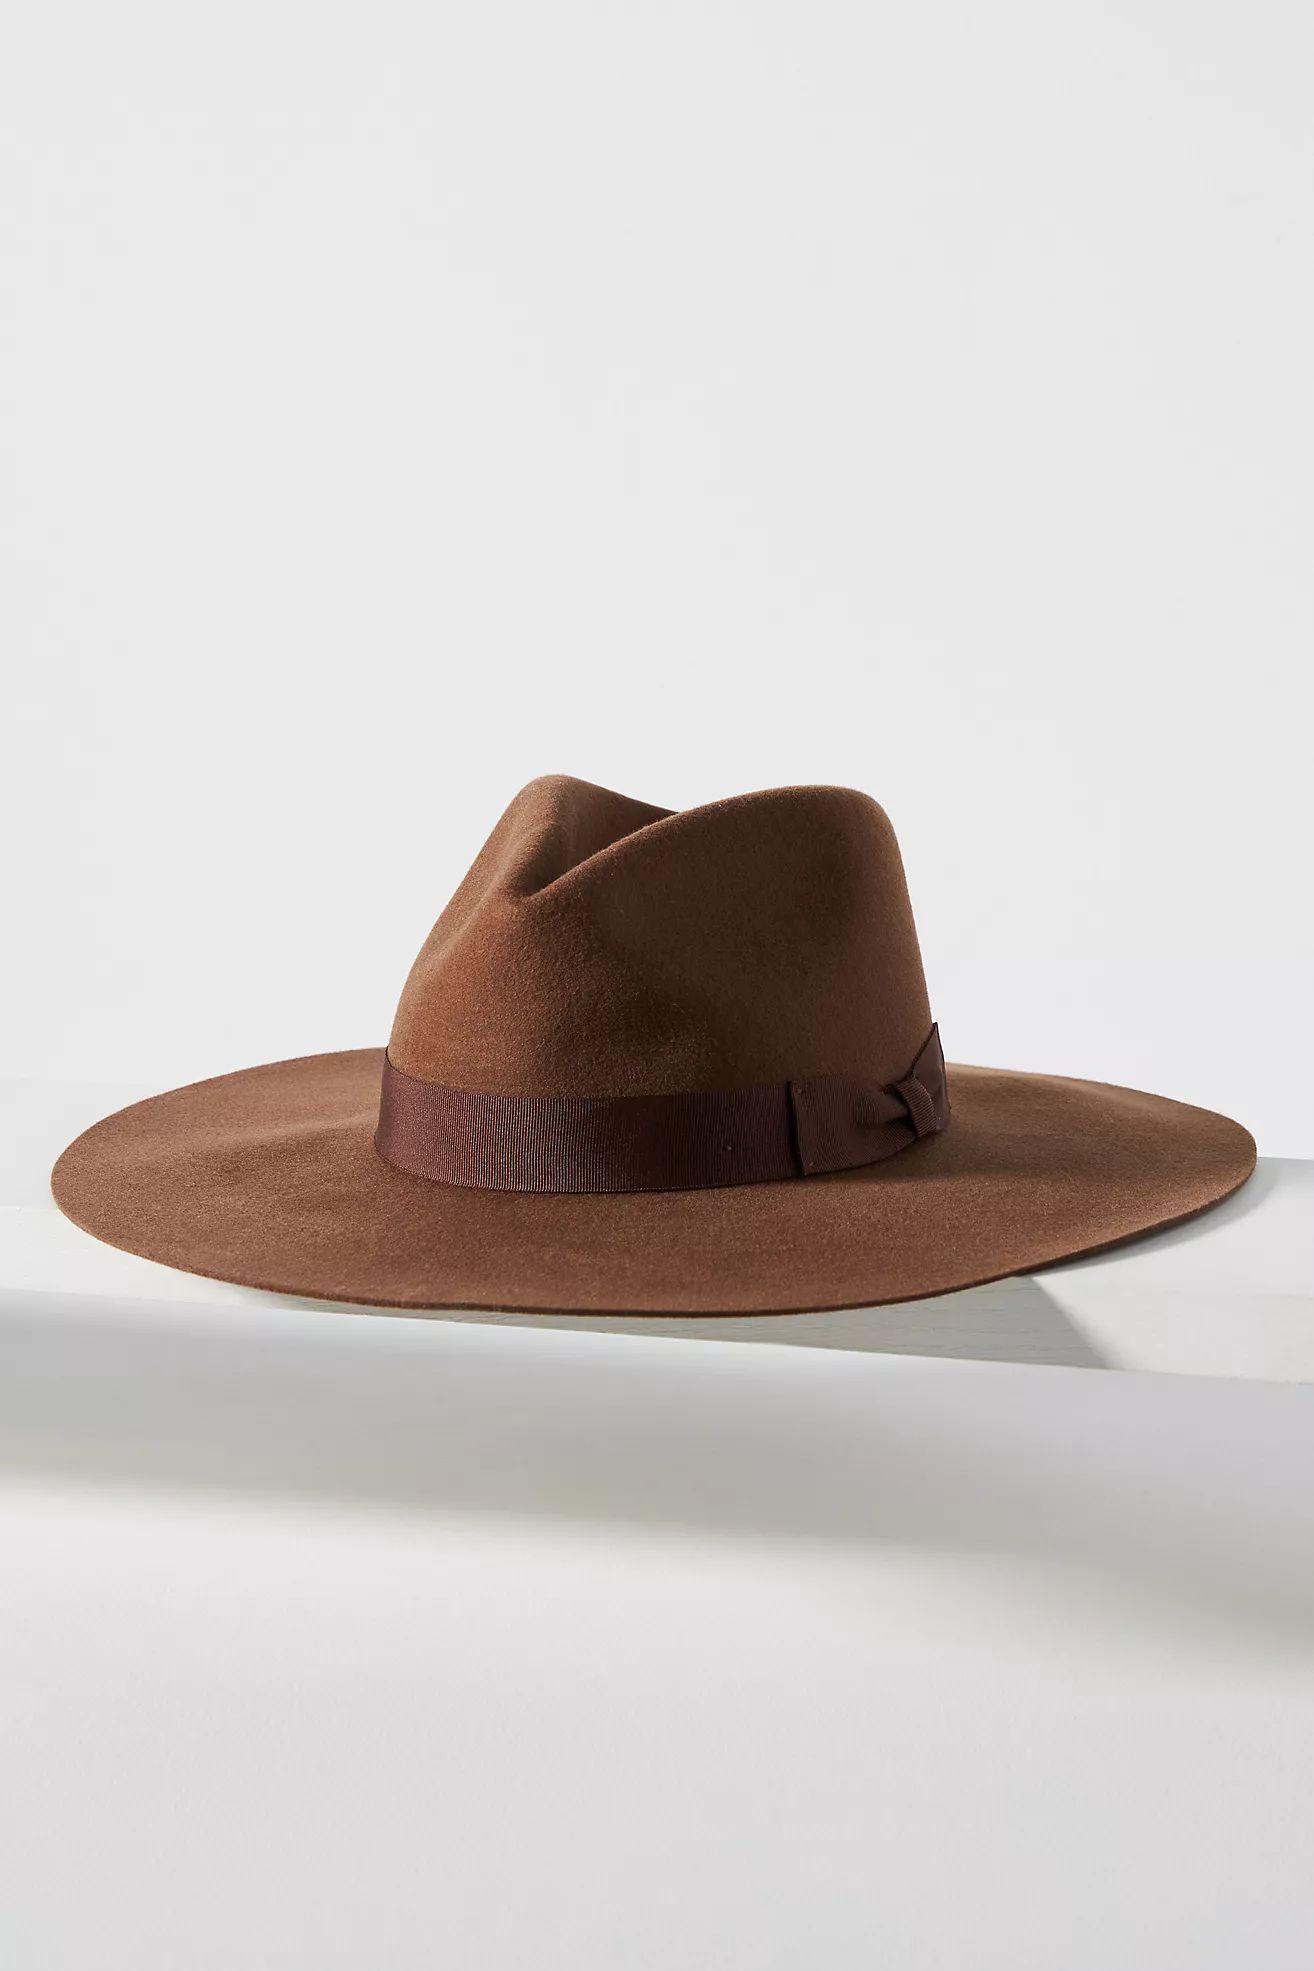 Wyeth Long-Brim Rancher Hat | Anthropologie (US)